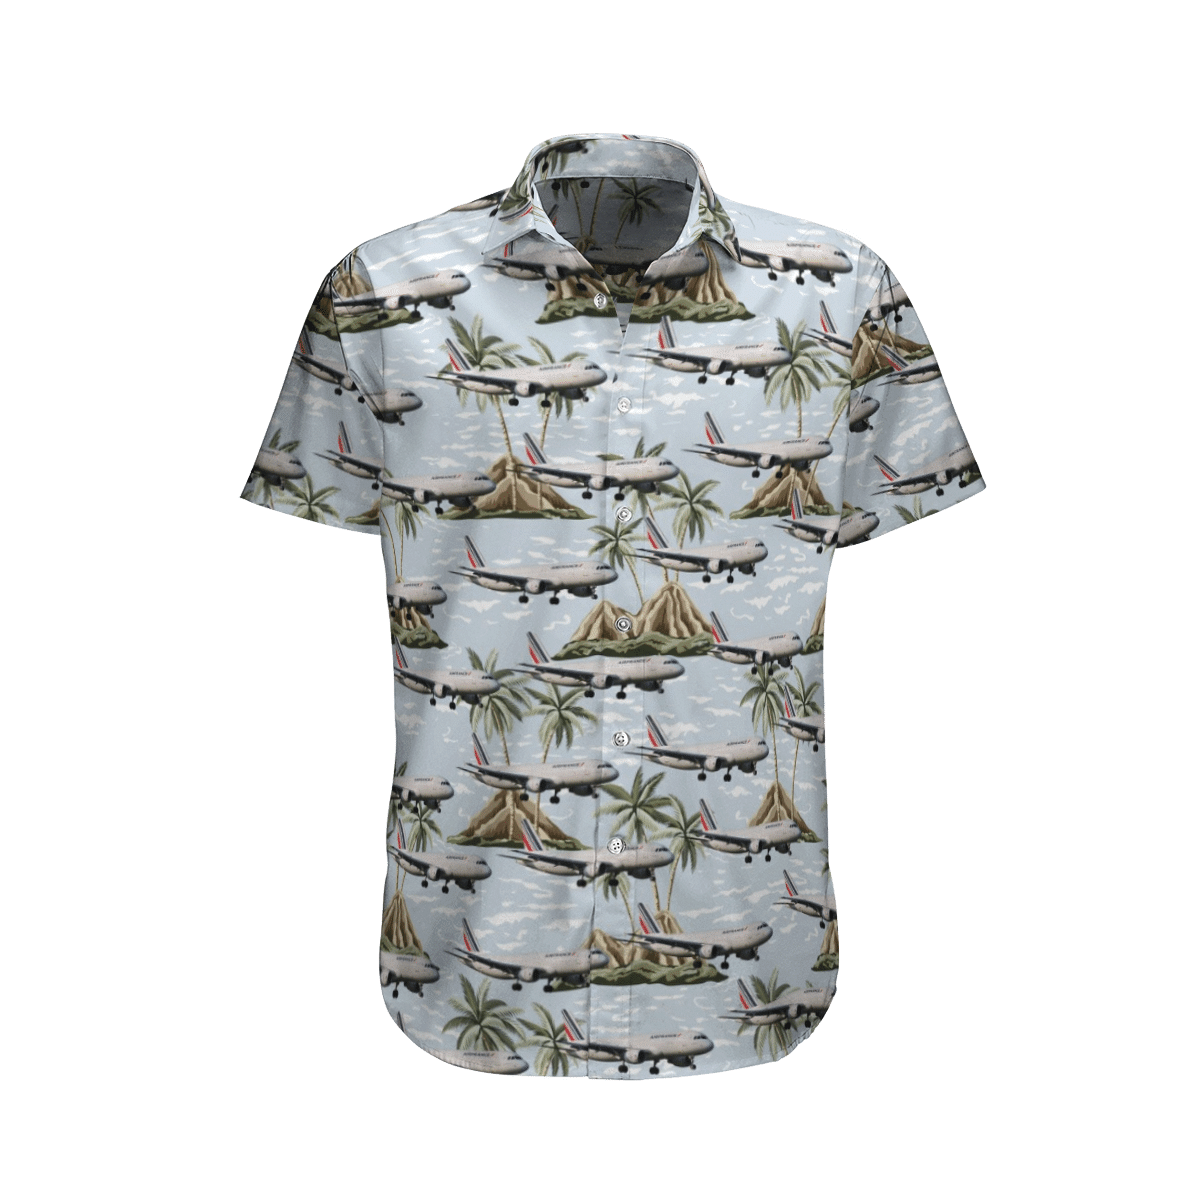 Get a new Hawaiian shirt to enjoy summer vacation 126